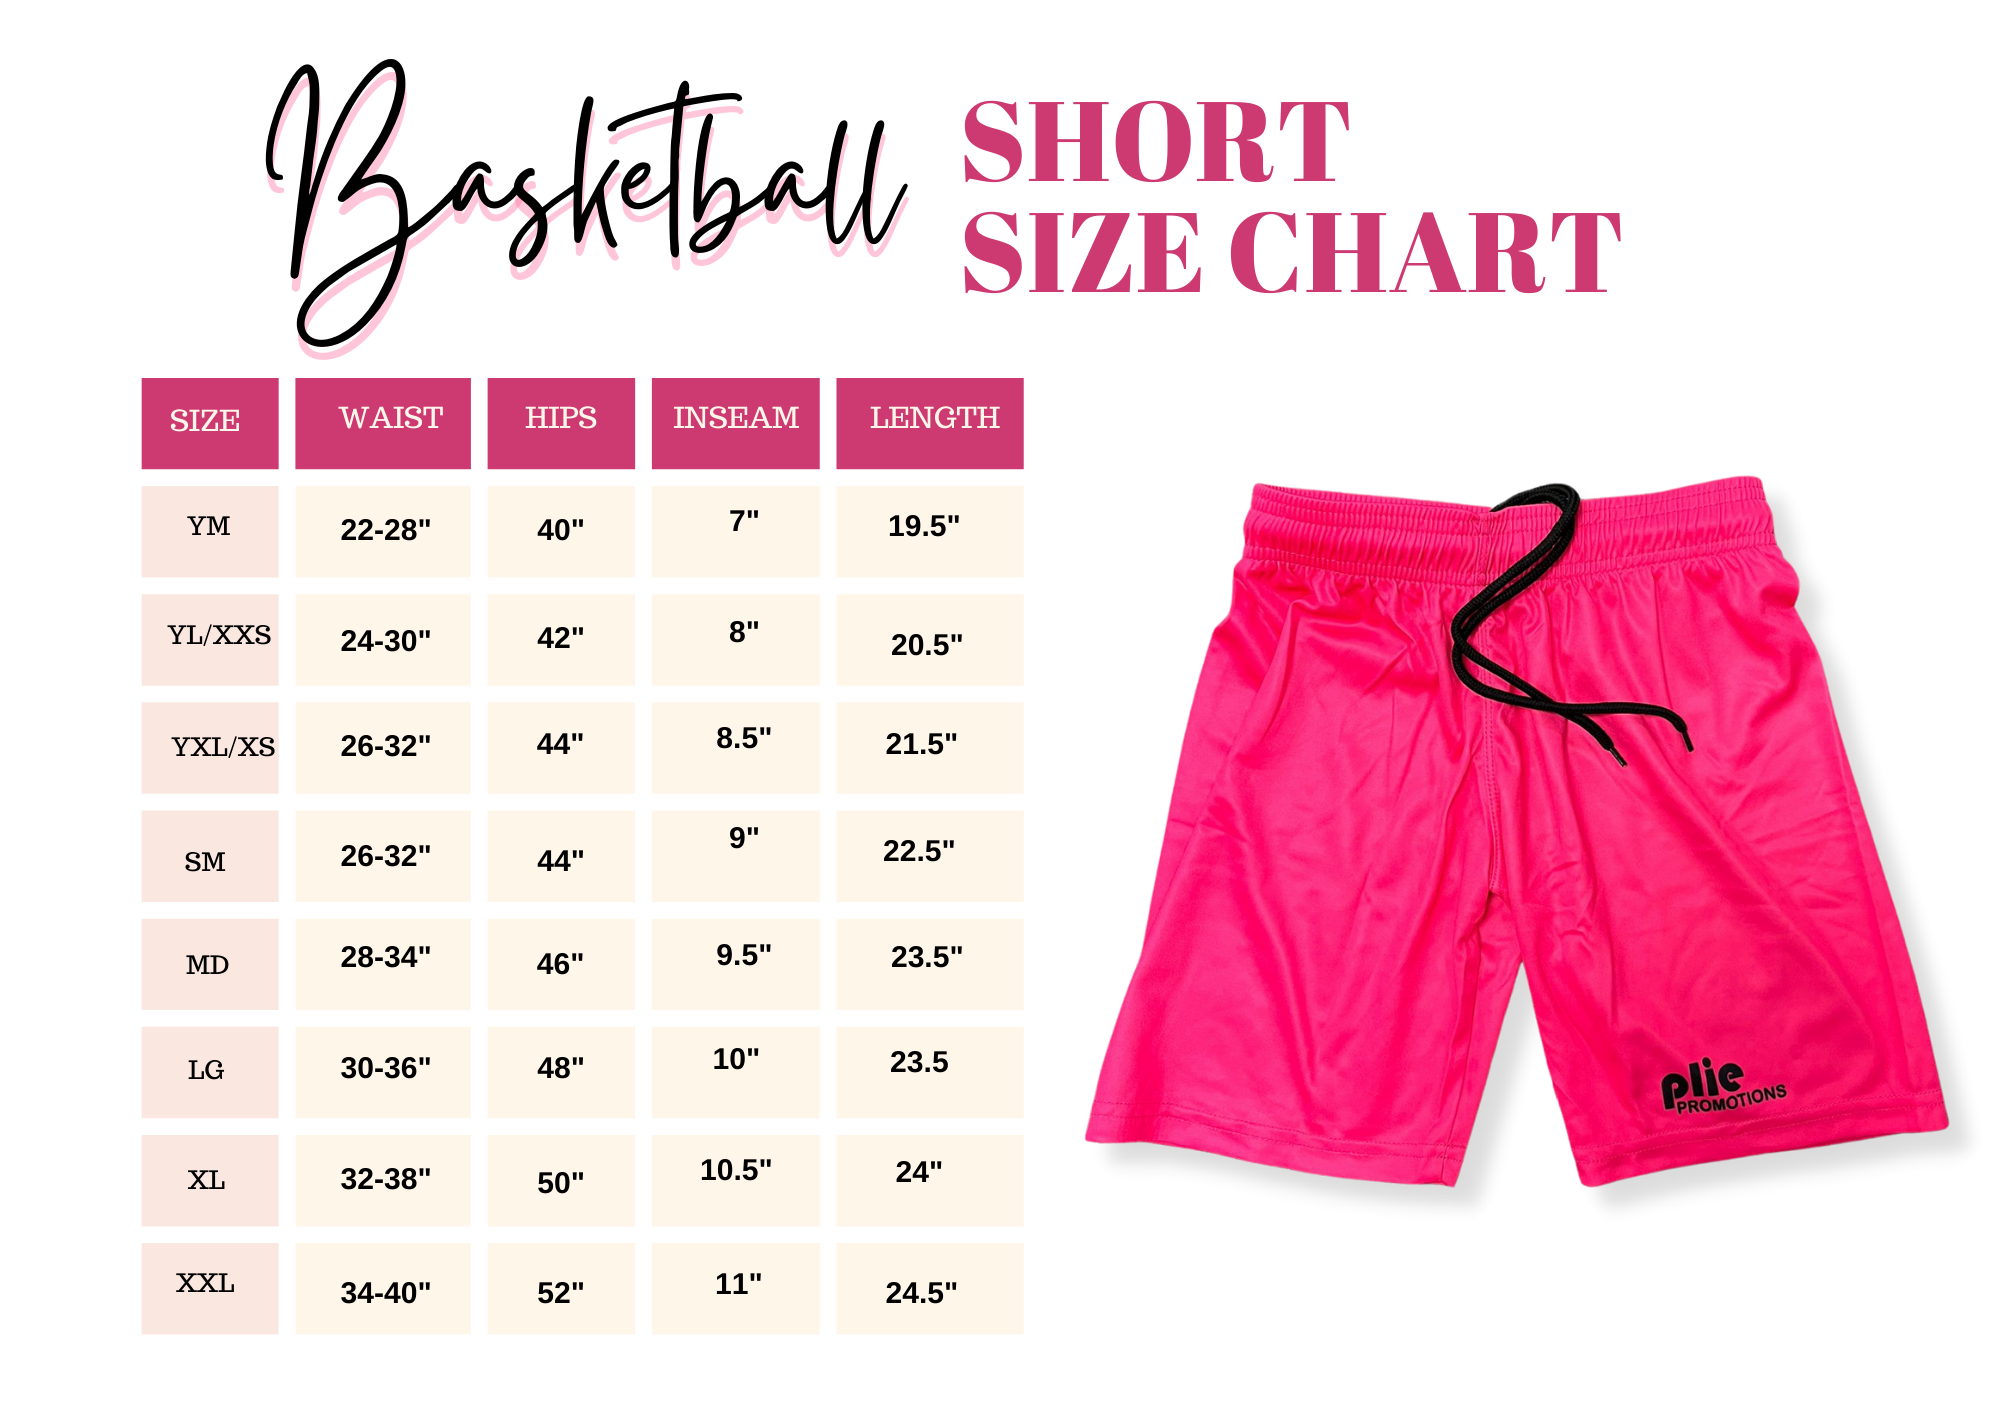 The long and short of basketball shorts